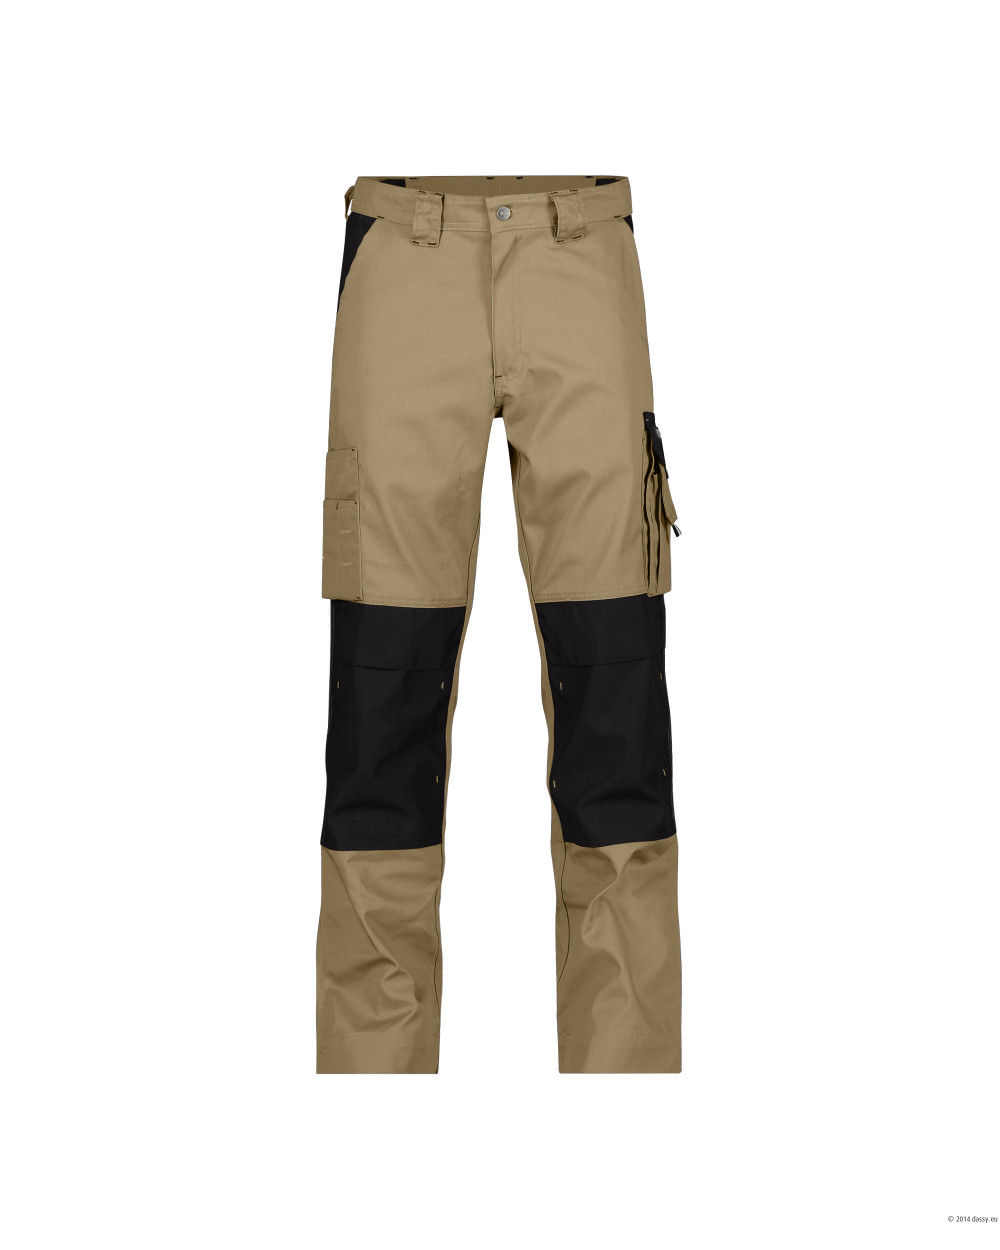 Pantalon DE TRAVAIL BOSTON BICOLORE PC 245g BEIGE/NOIR